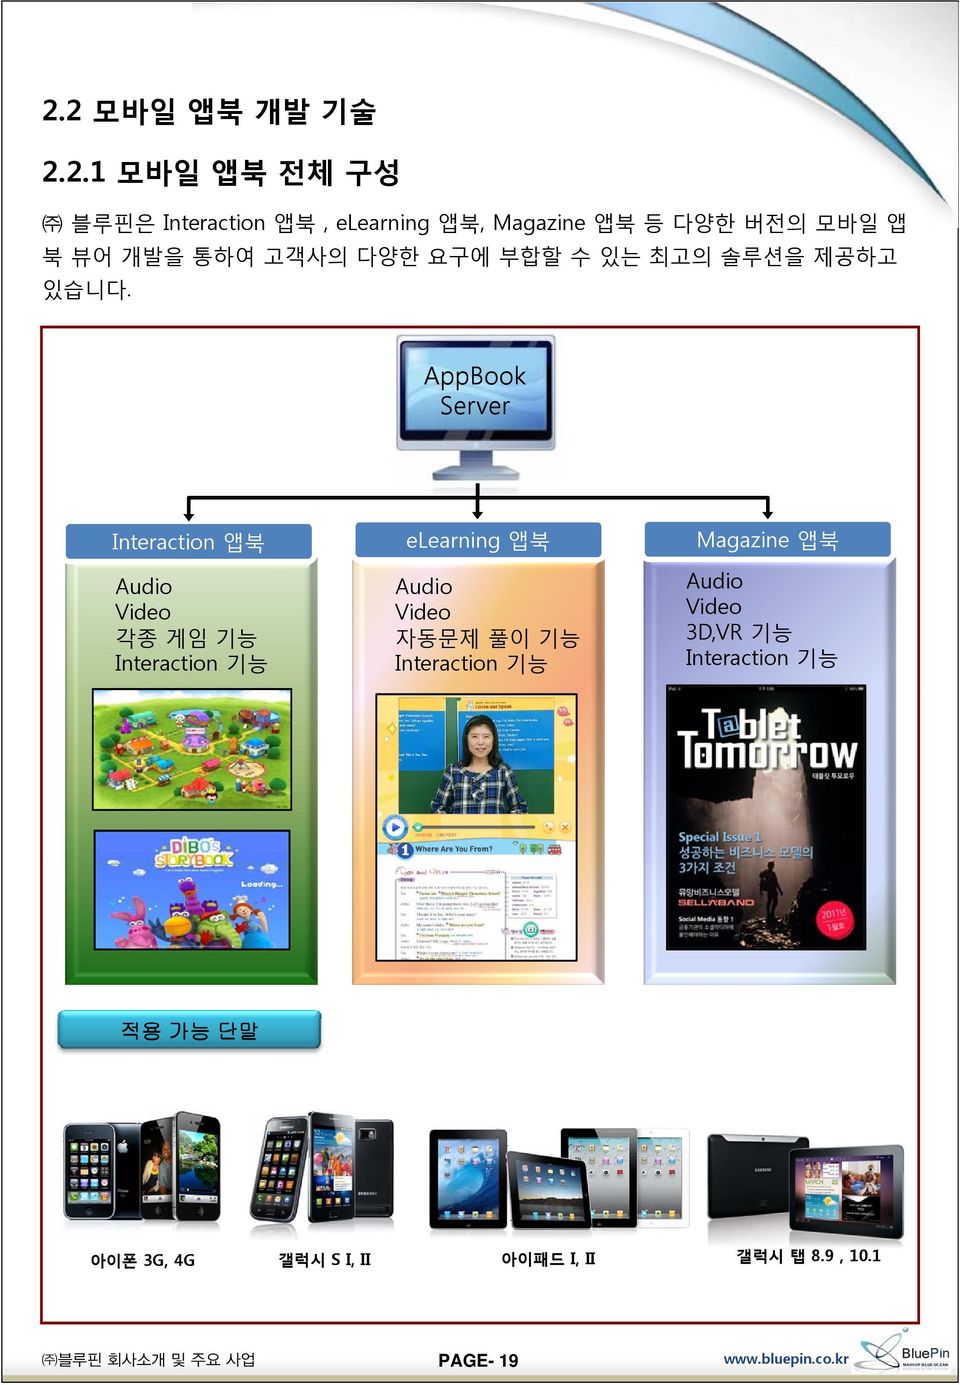 AppBook Server elearning 앱북 Interaction 앱북 Audio Video 각종 게임 기능 Interaction 기능 Audio Video 자동문제